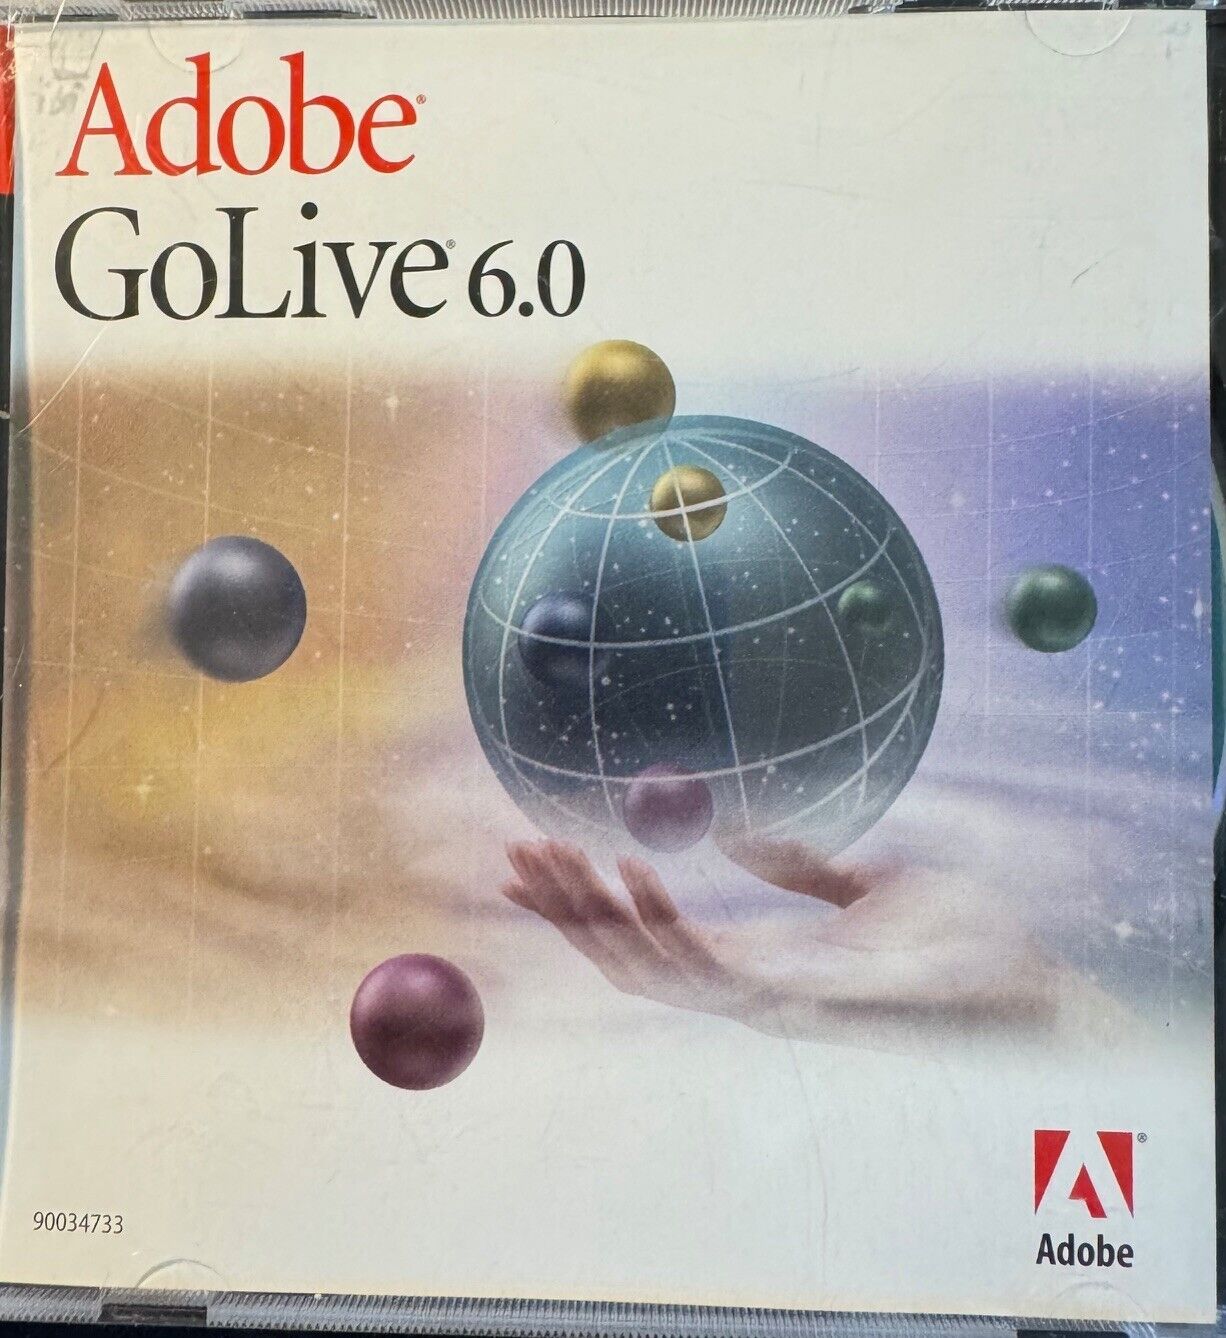 Adobe GoLive 6.0 Full Version for Windows W/Key